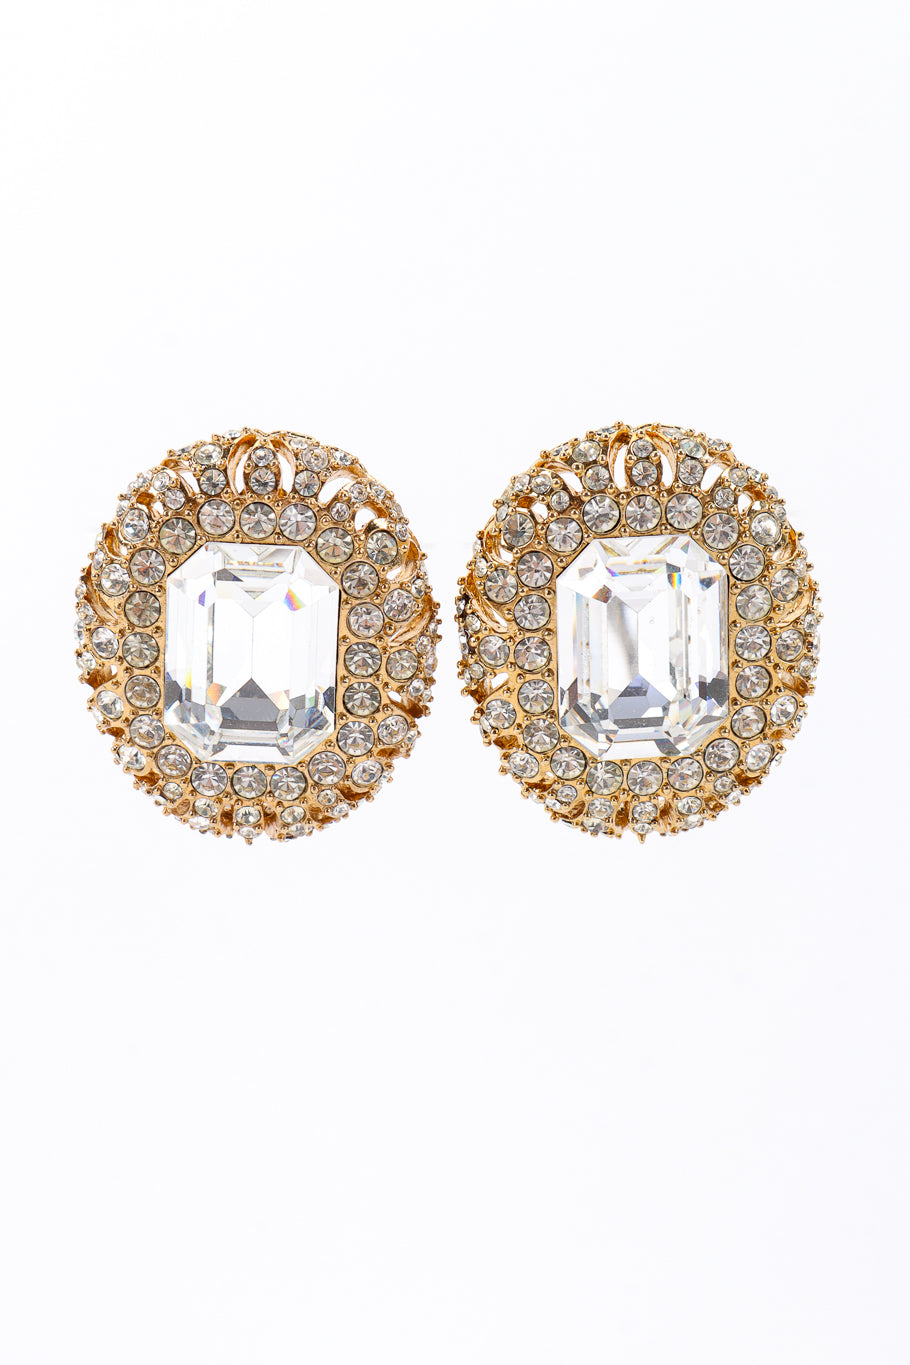 Vintage Givenchy Oval Crystal Gem Earrings front @recessla